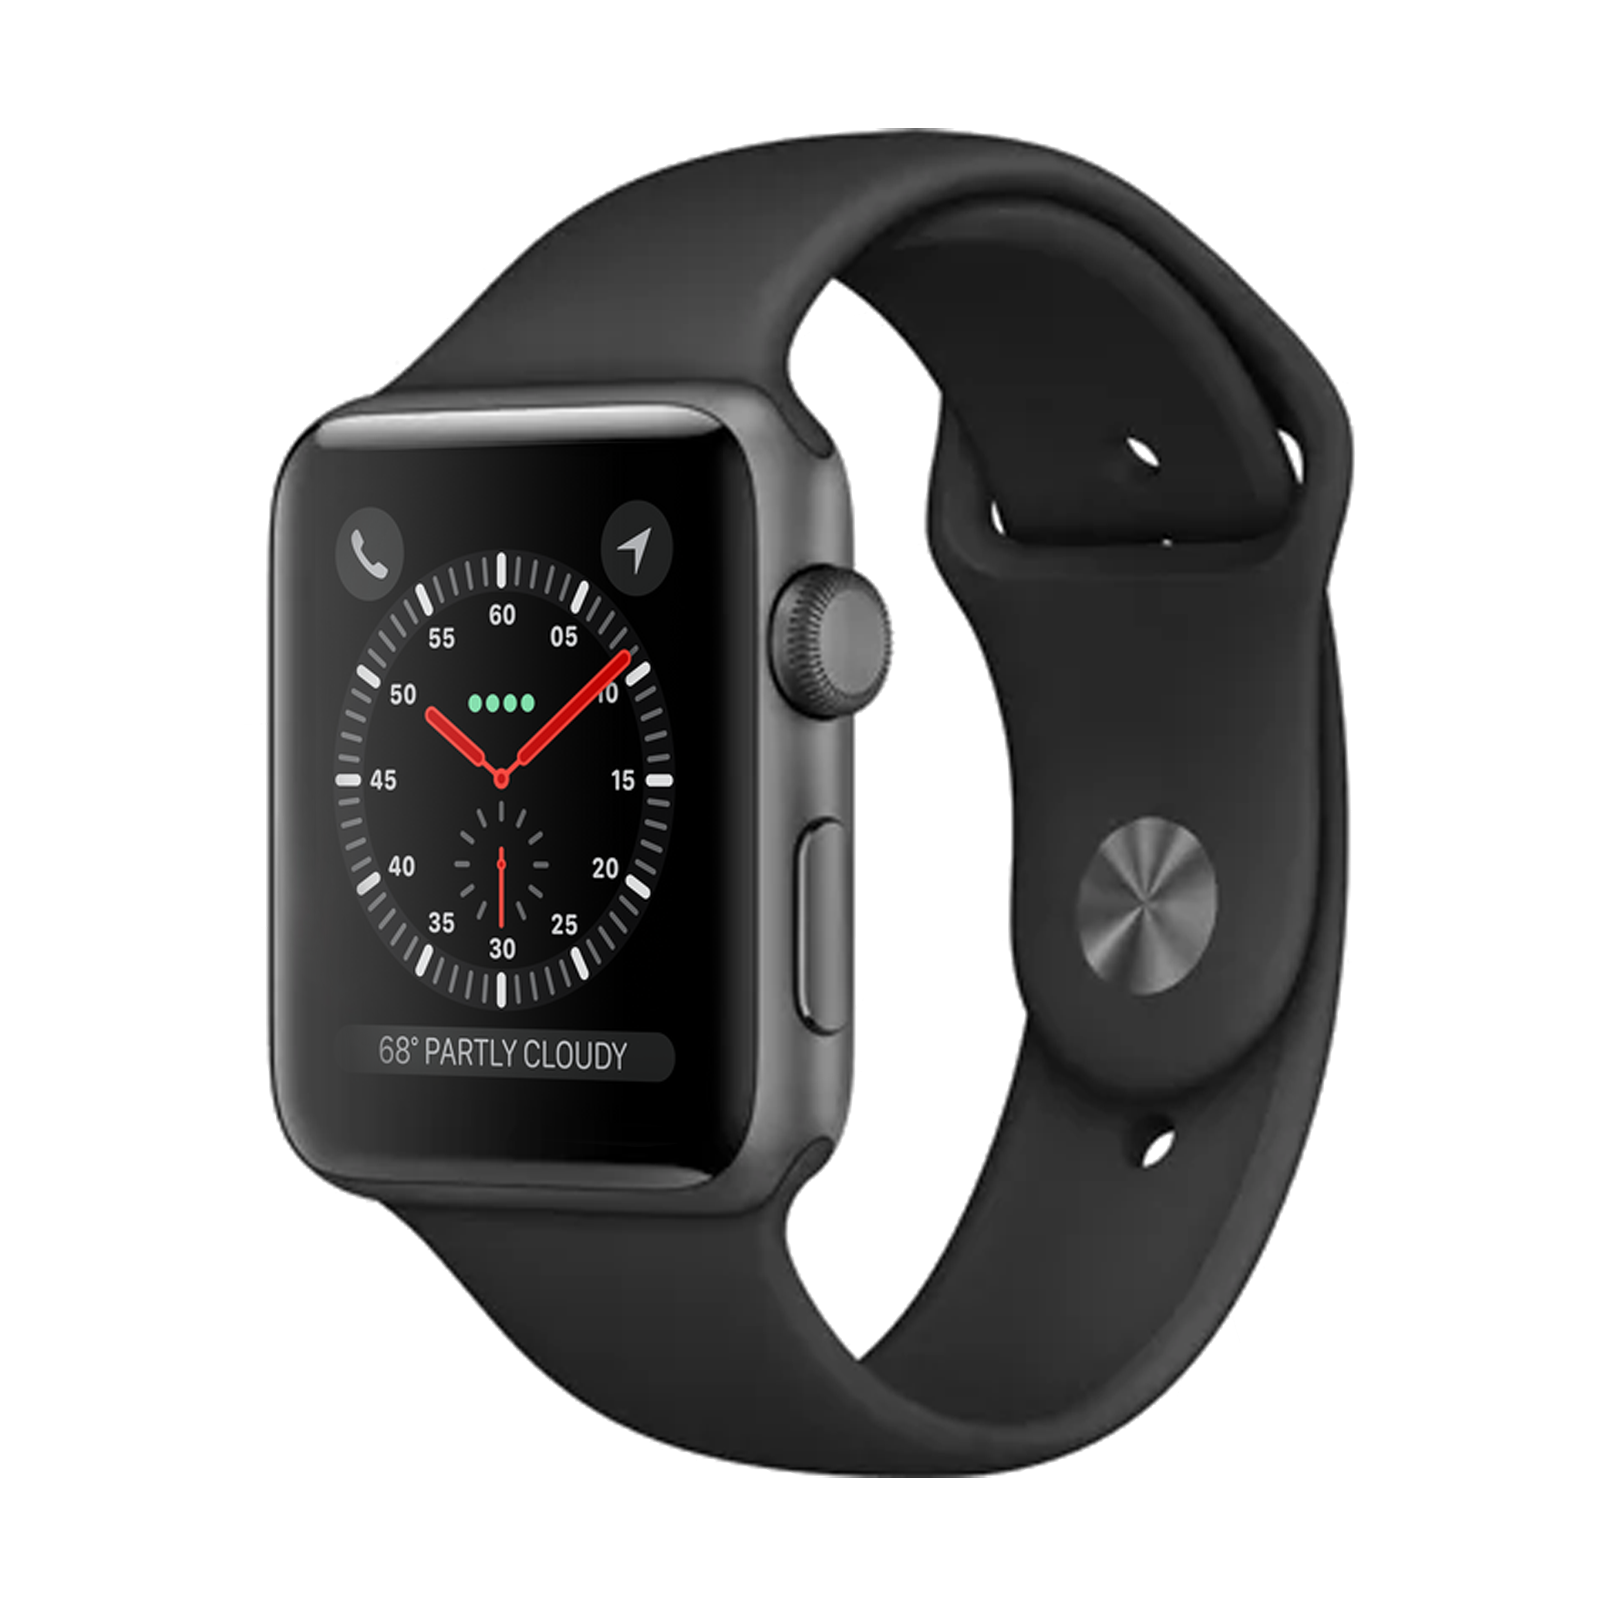 Apple Watch Series 3 Sport 38mm Grey Very Good Cellular - Unlocked